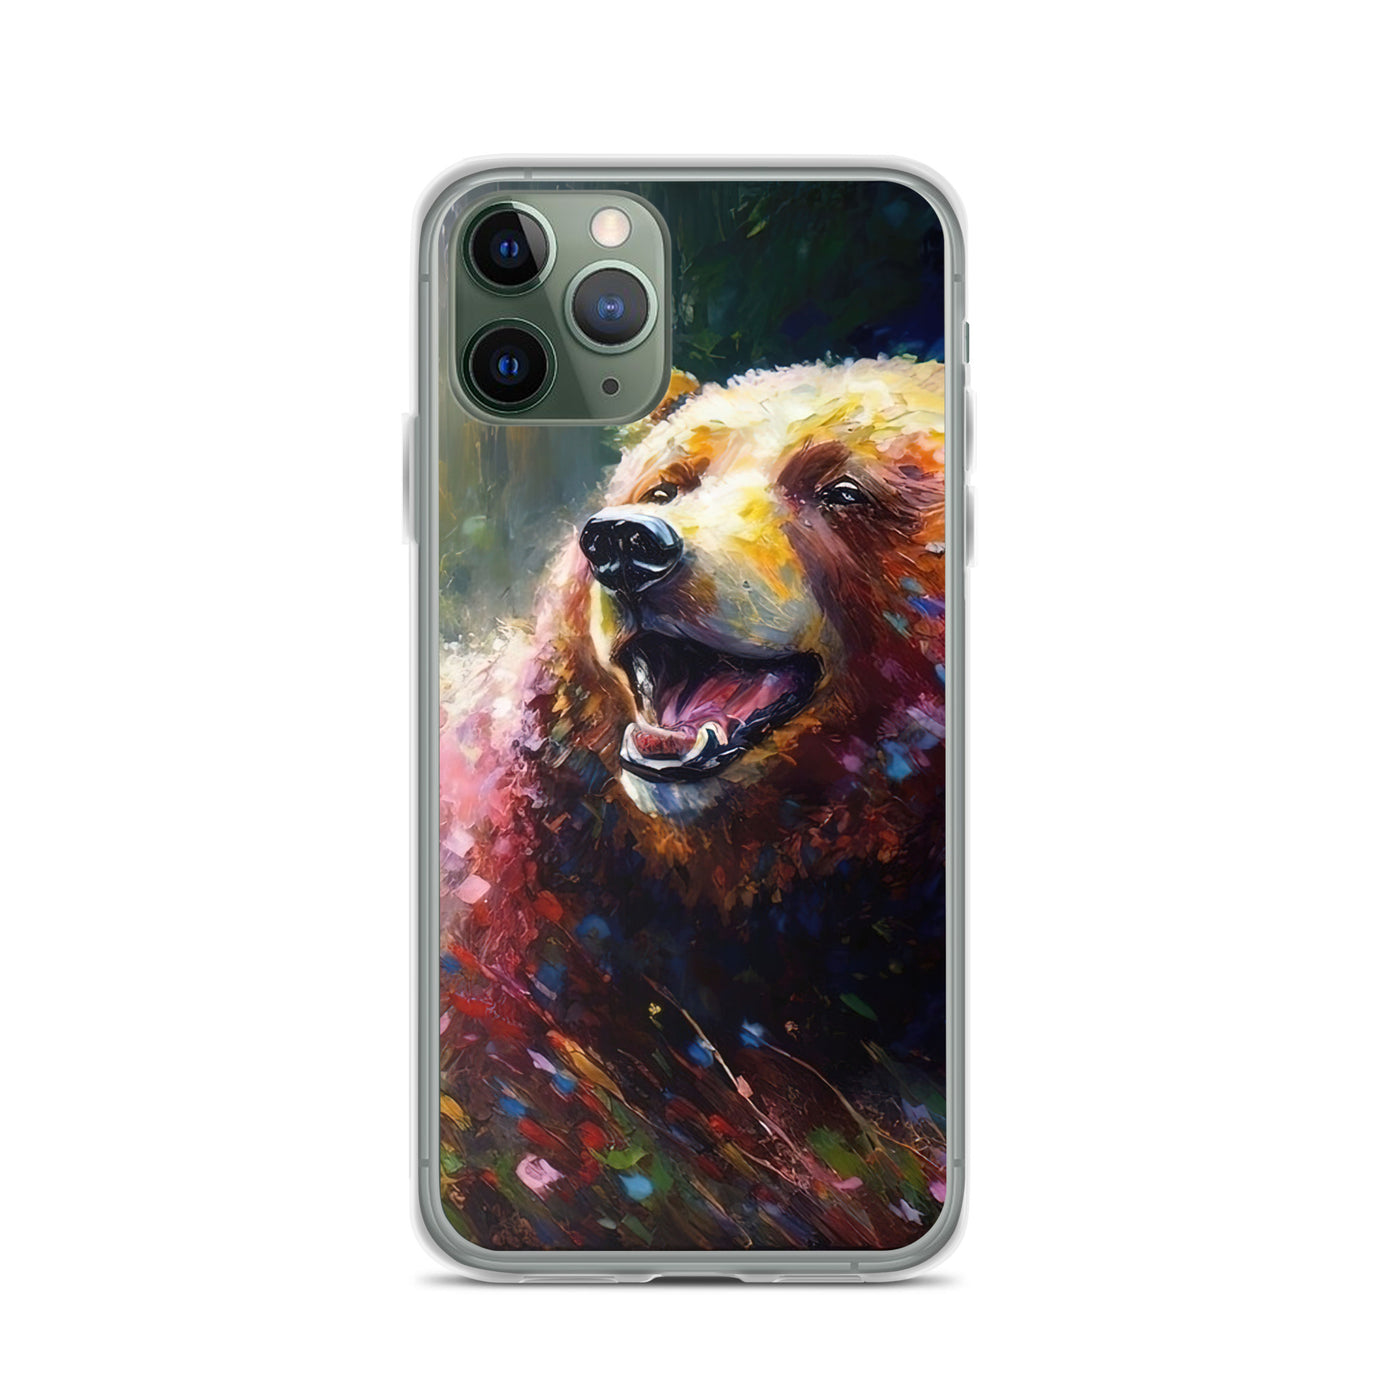 Süßer Bär - Ölmalerei - iPhone Schutzhülle (durchsichtig) camping xxx iPhone 11 Pro